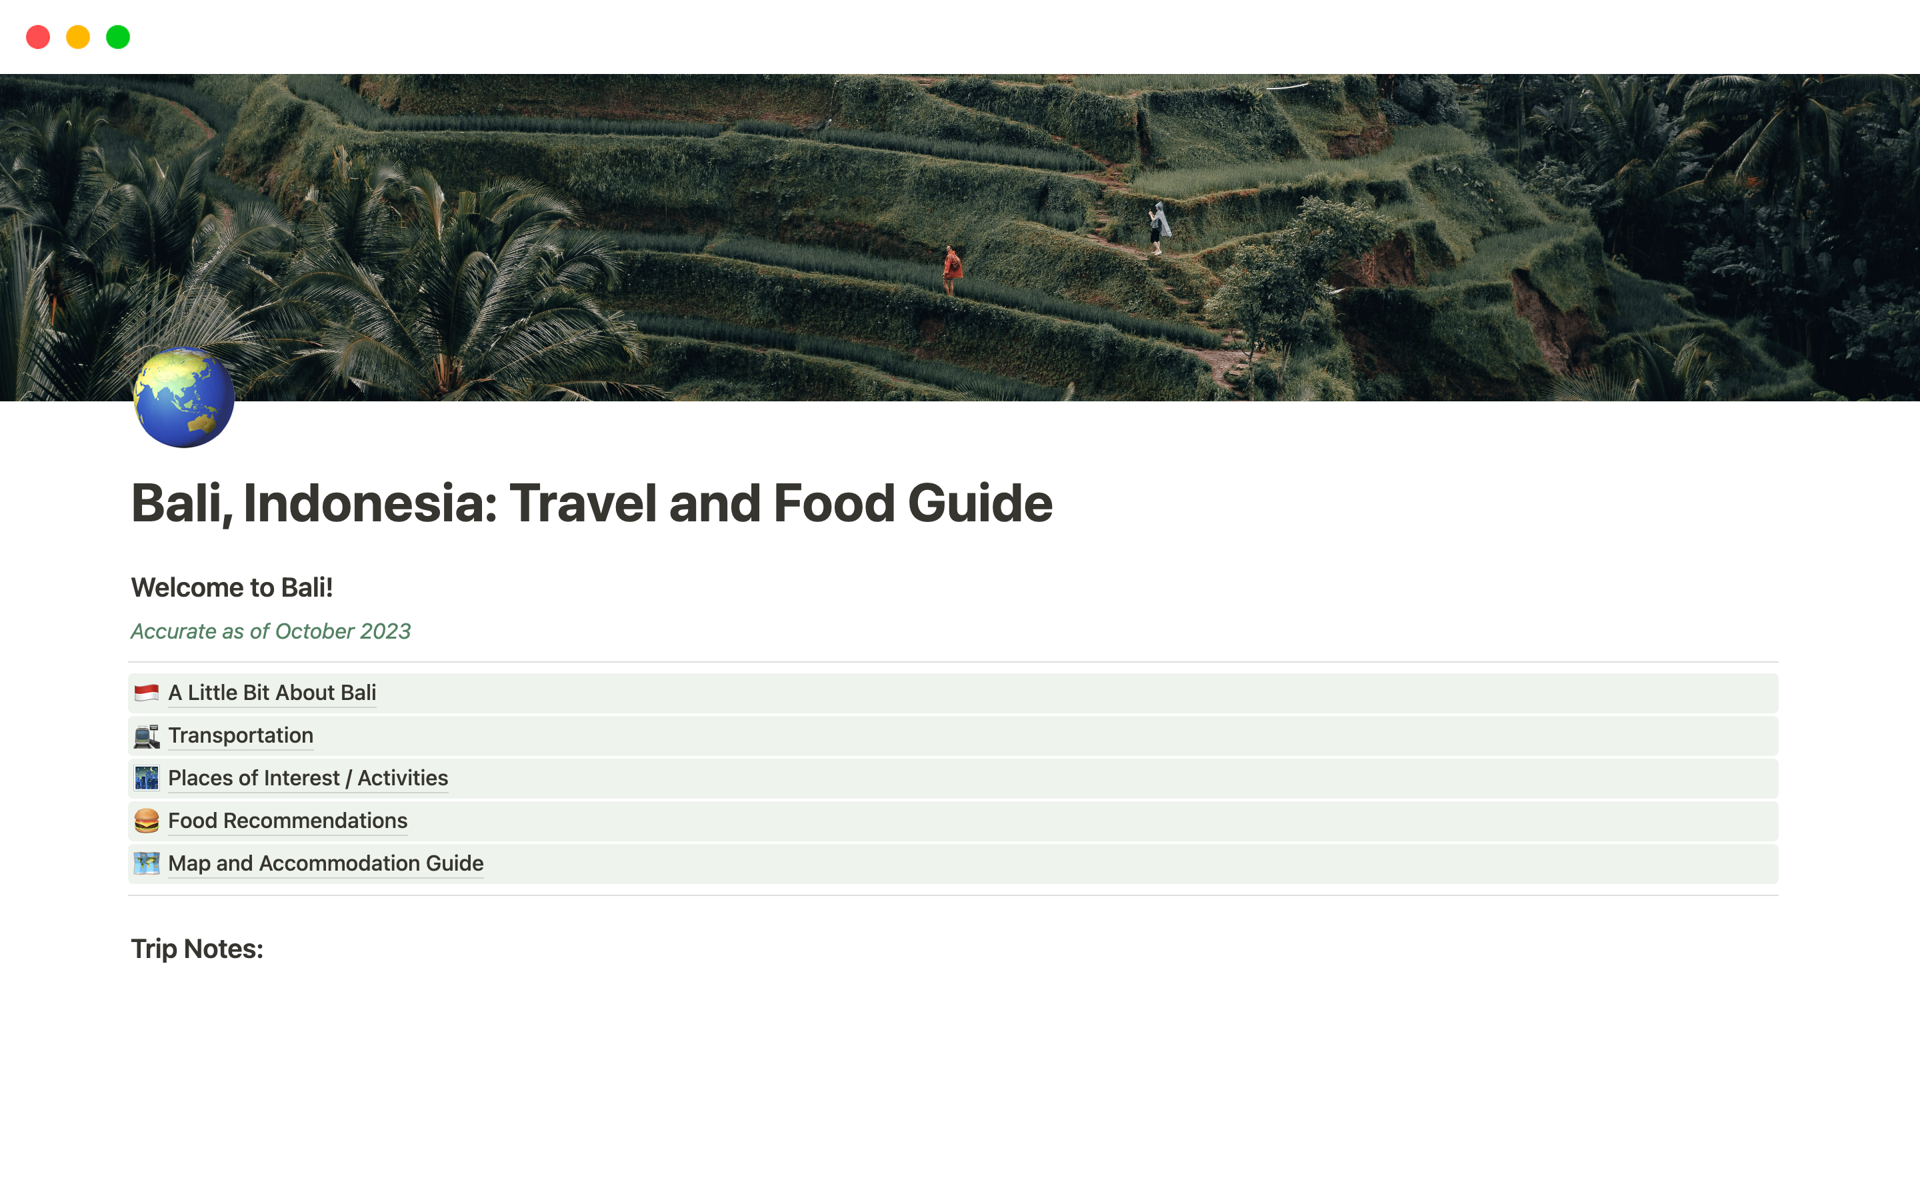 Vista previa de plantilla para Bali, Indonesia: Travel and Food Guide